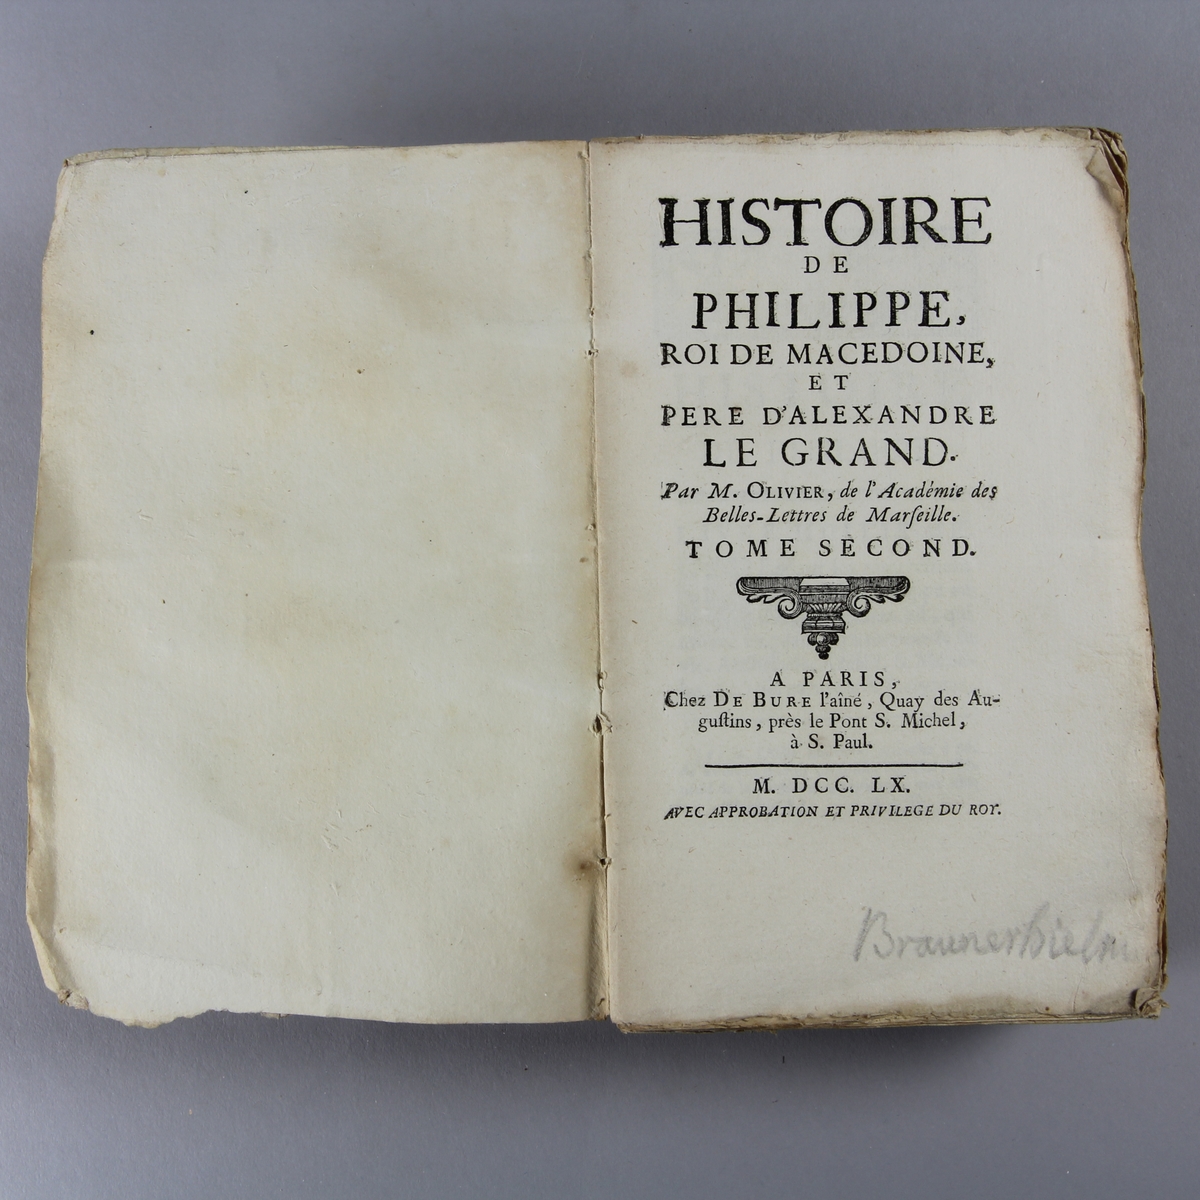 Bok, häftad, "Histoire de Philippe, roi de Macedoine et père d'Alexandre le grand." del 2, tryckt i Paris 1760. Pärmar av marmorerat papper, oskuret snitt.